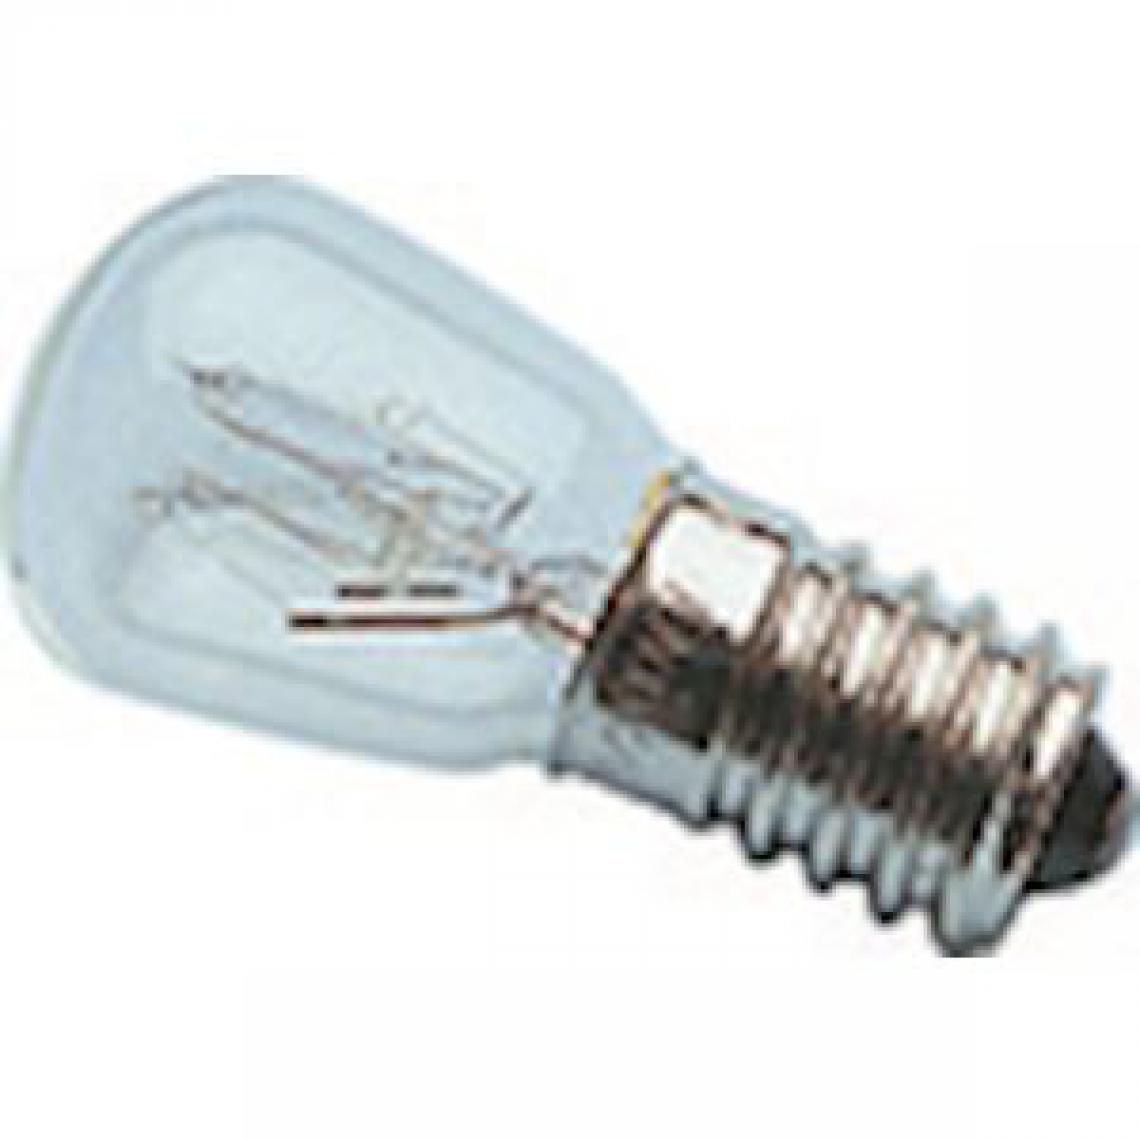 Orbitec - lampe miniature - e14 - 22 x 48 - 24 volts - 25 watts - orbitec 118838 - Ampoules LED